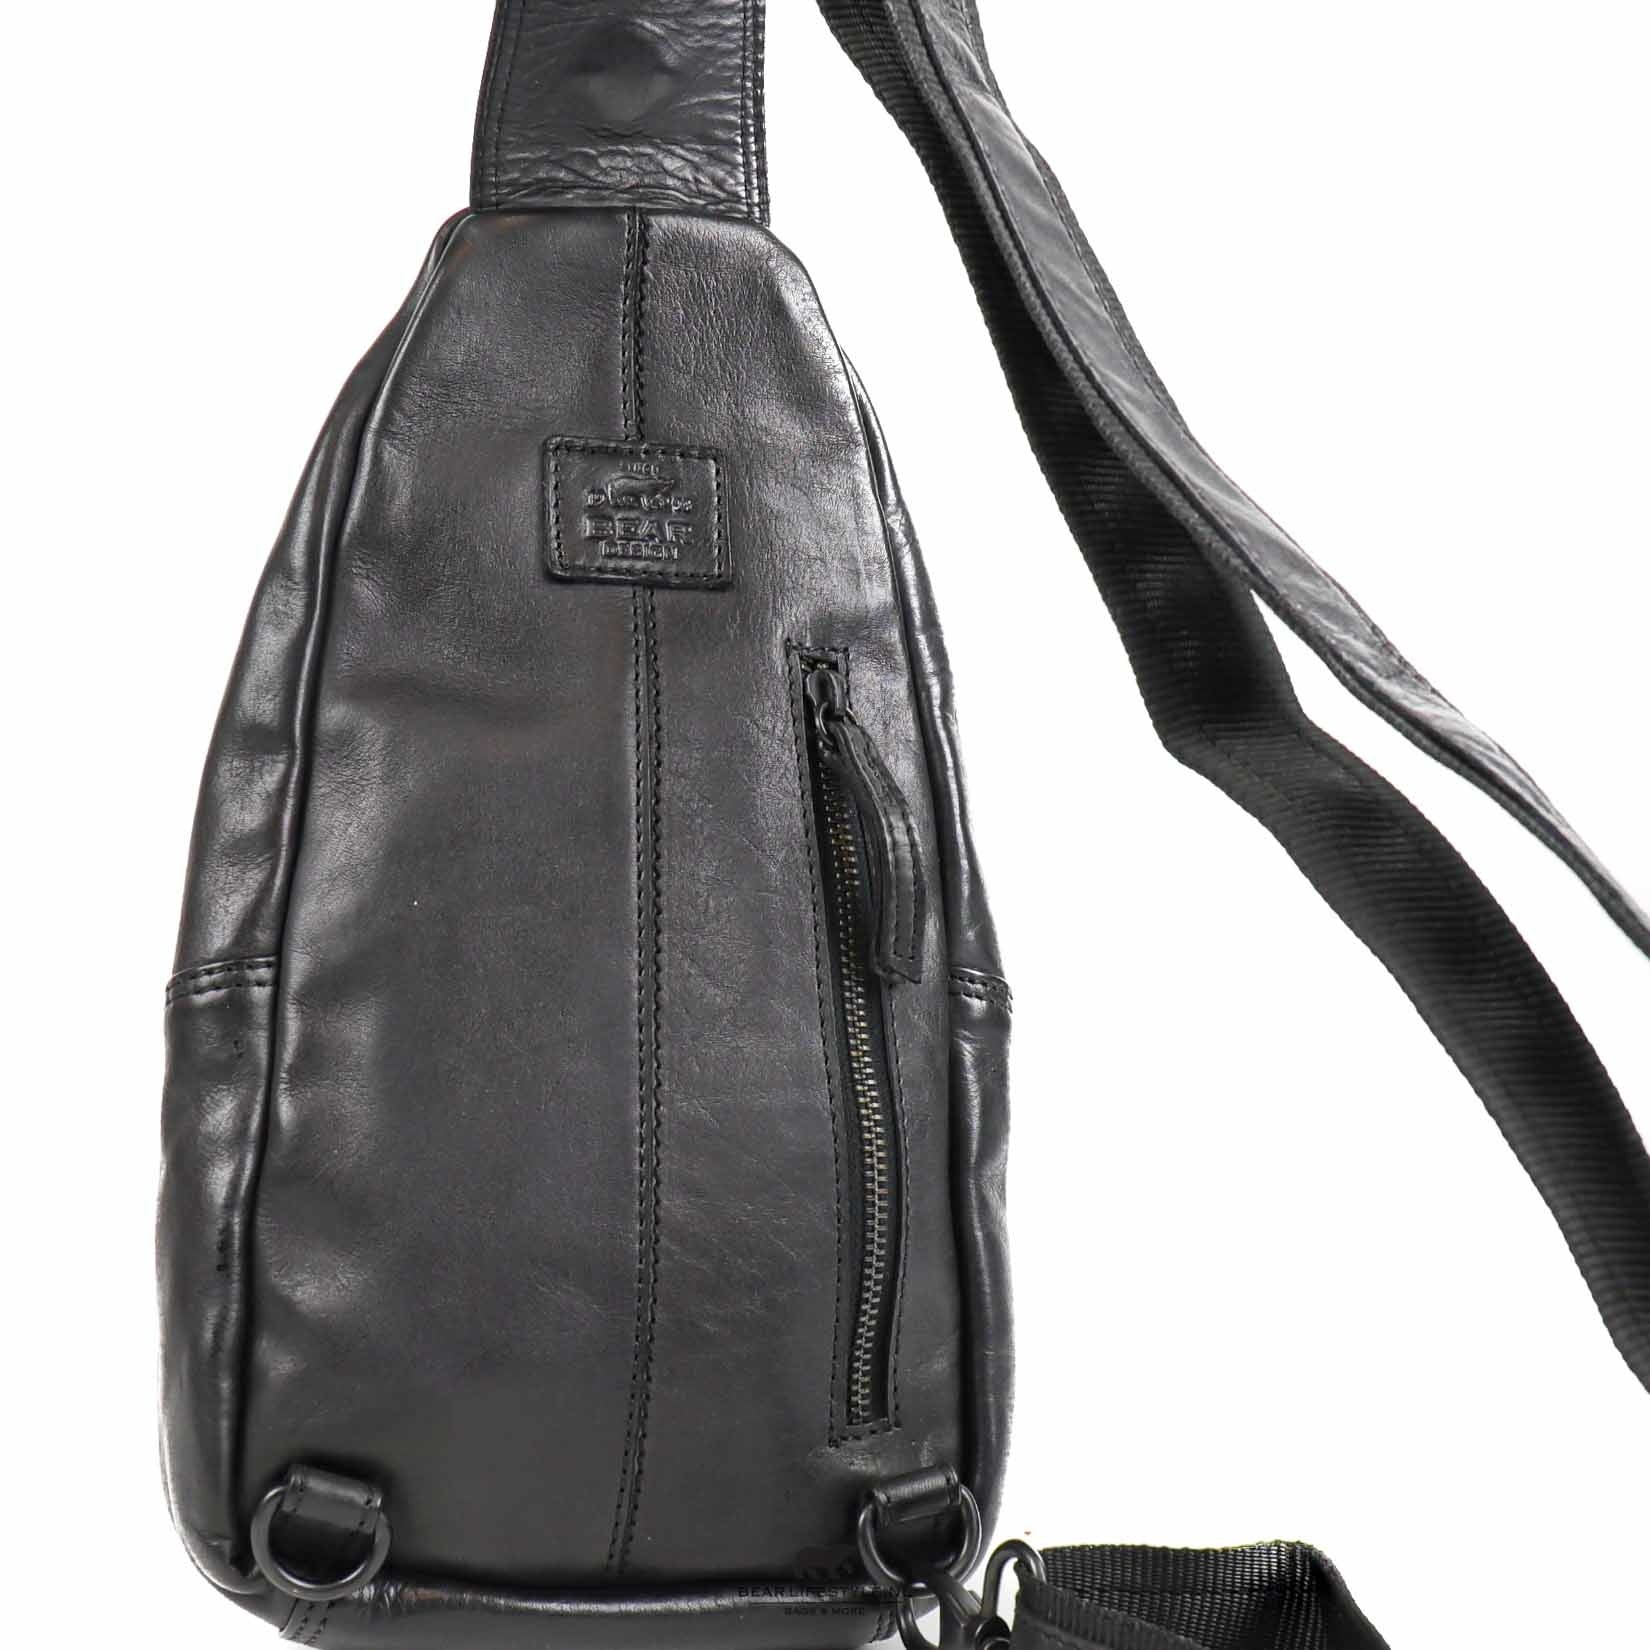 Crossbody bag 'Daley' black - CL 41029